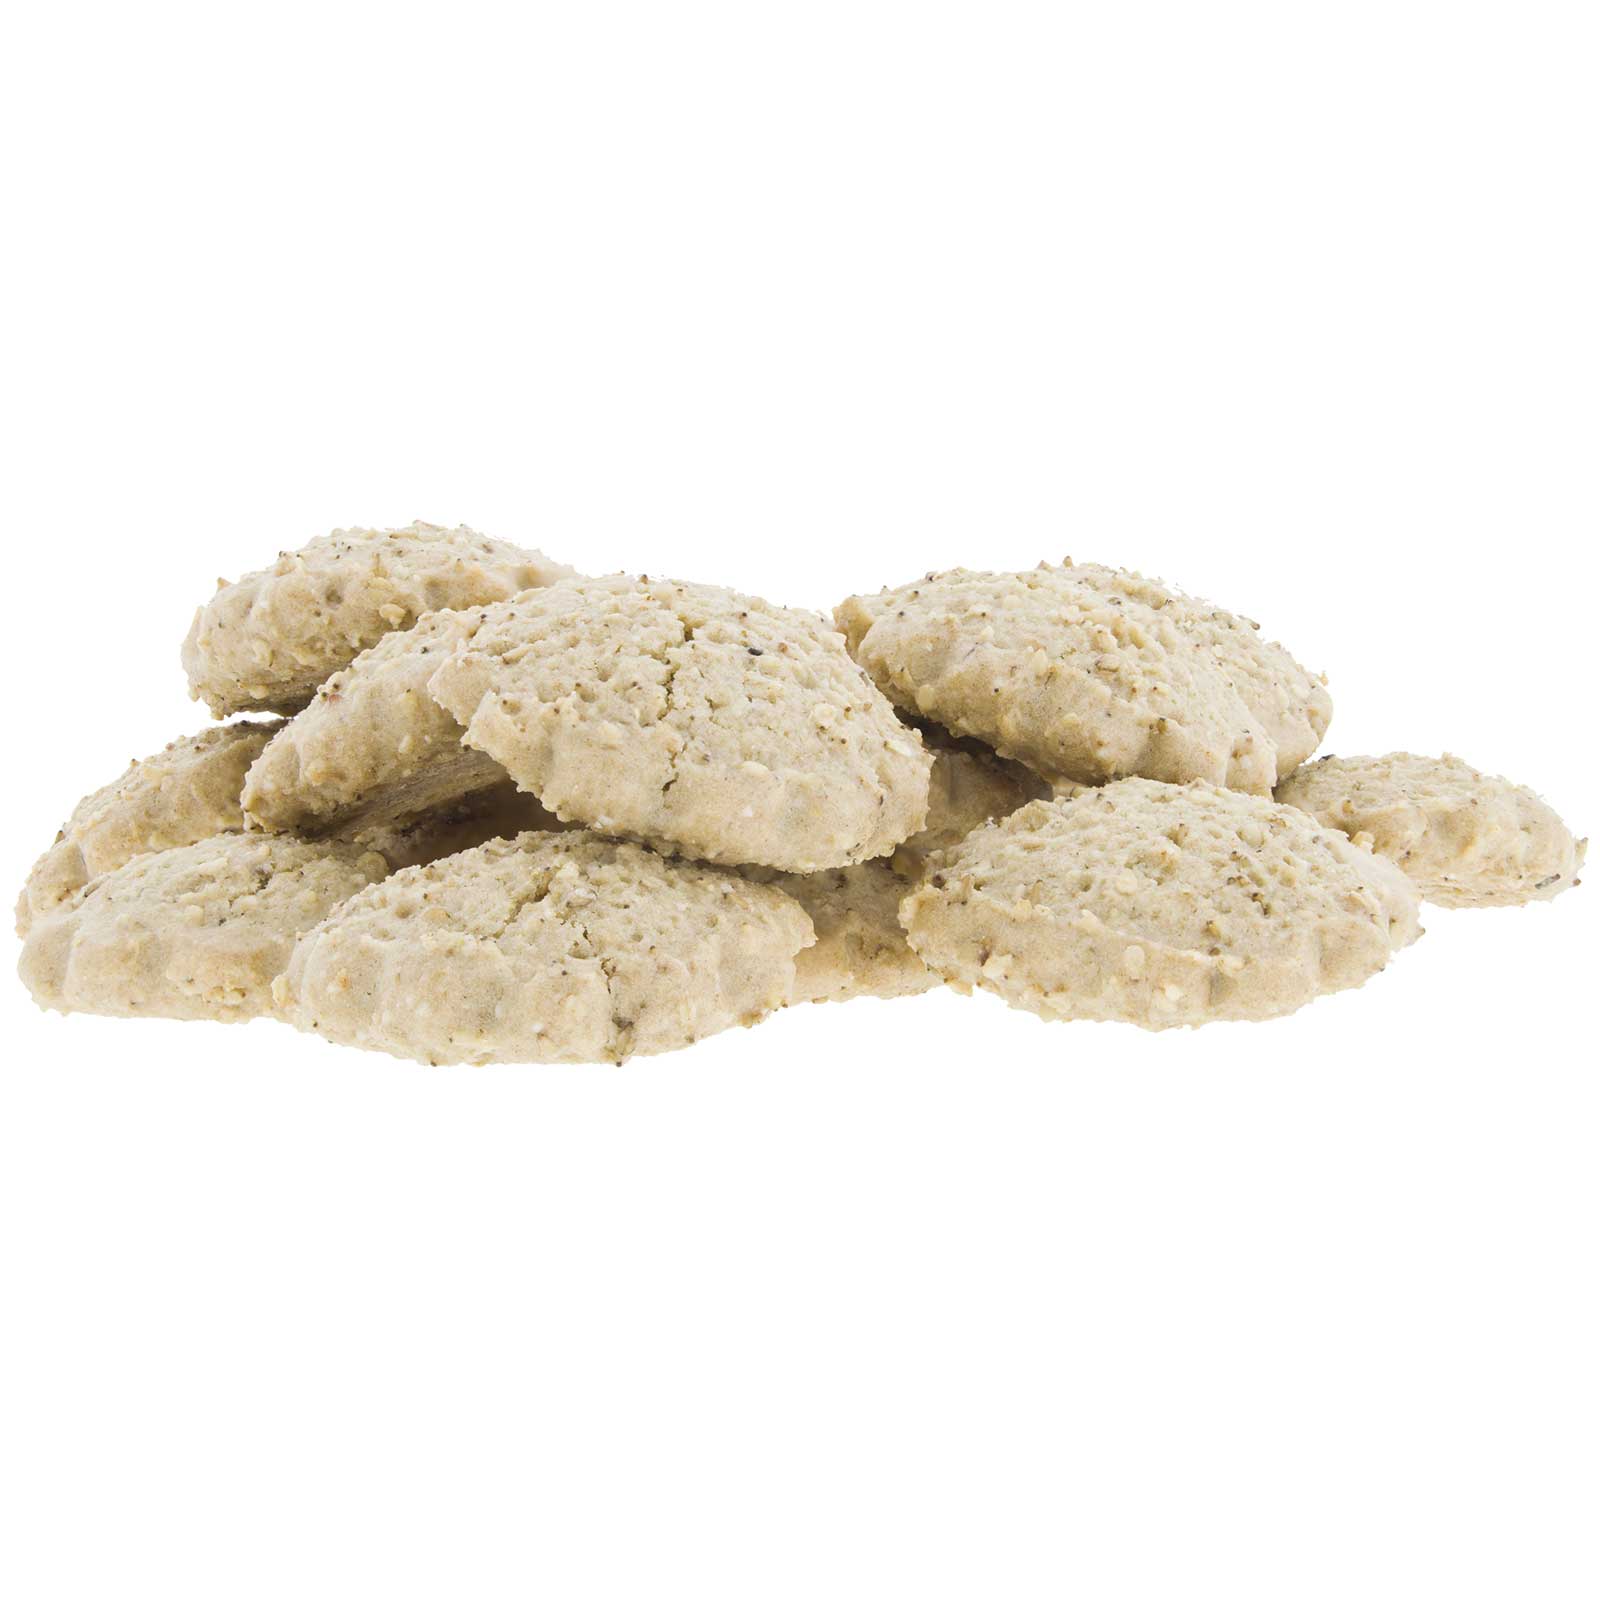 Saracene pasta (buckwheat) 200g Ecological cookies